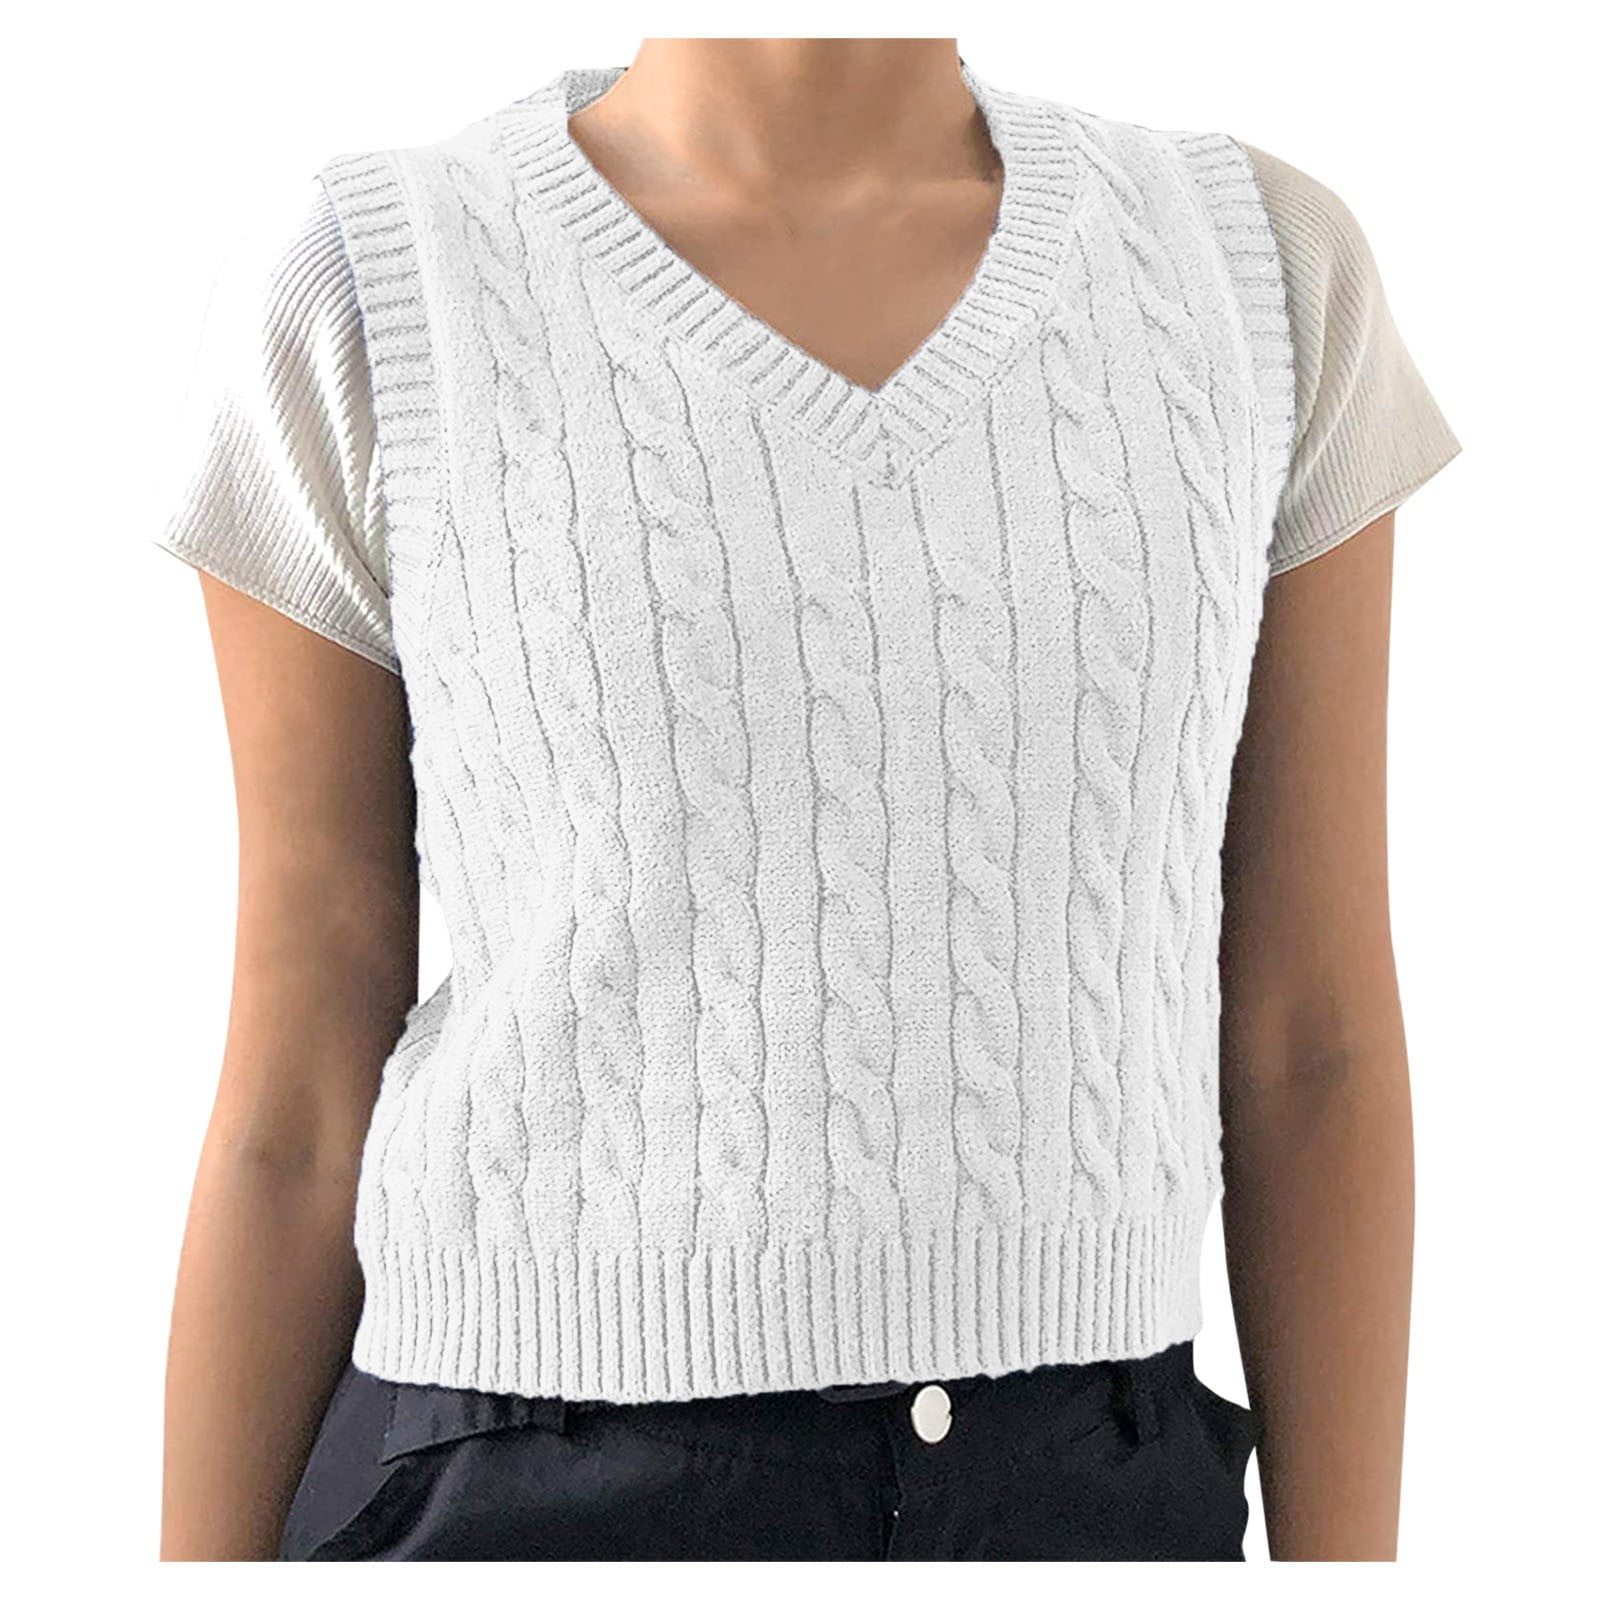 KIJBLAE Solid Knit Tee Shirts Sleeveless V Neck Vest for Women